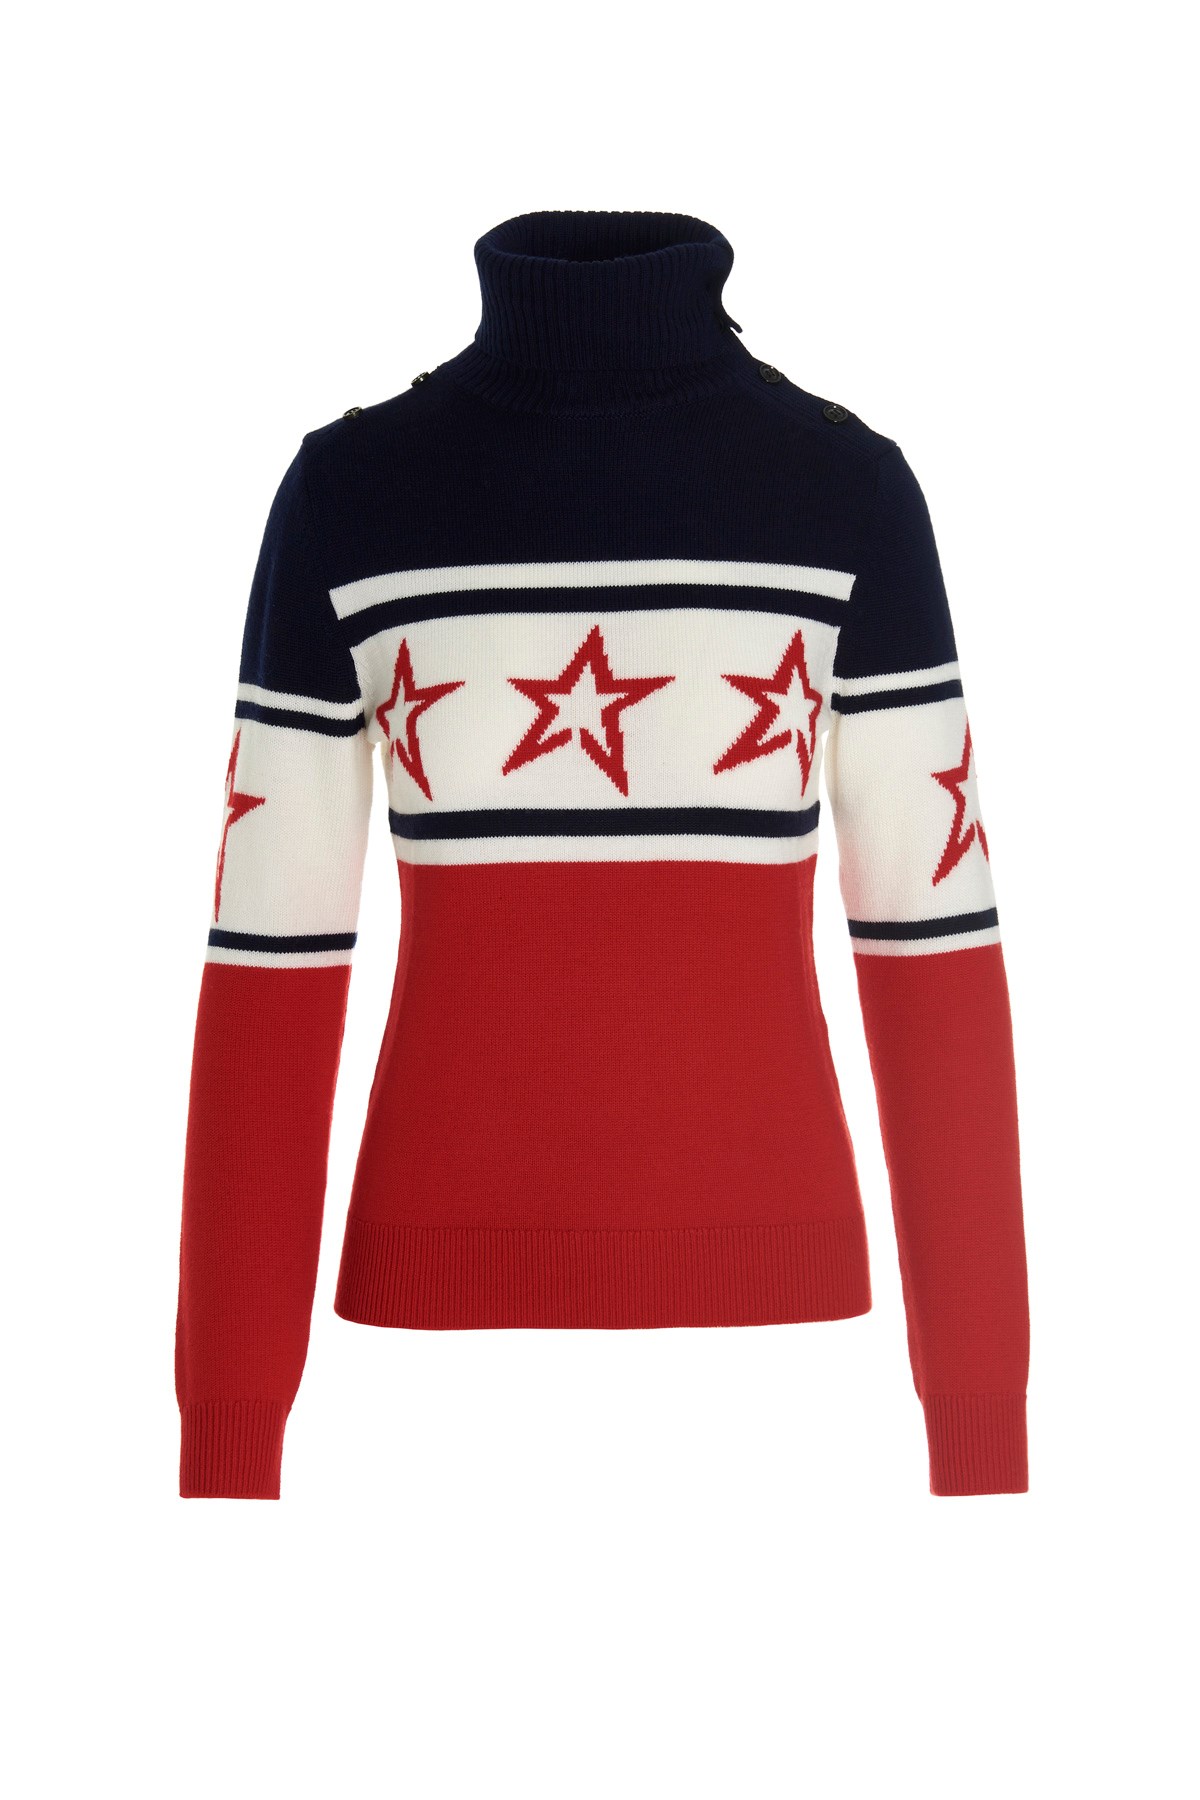 PERFECT MOMENT 'Chopper Sweater’ Turtleneck Sweater